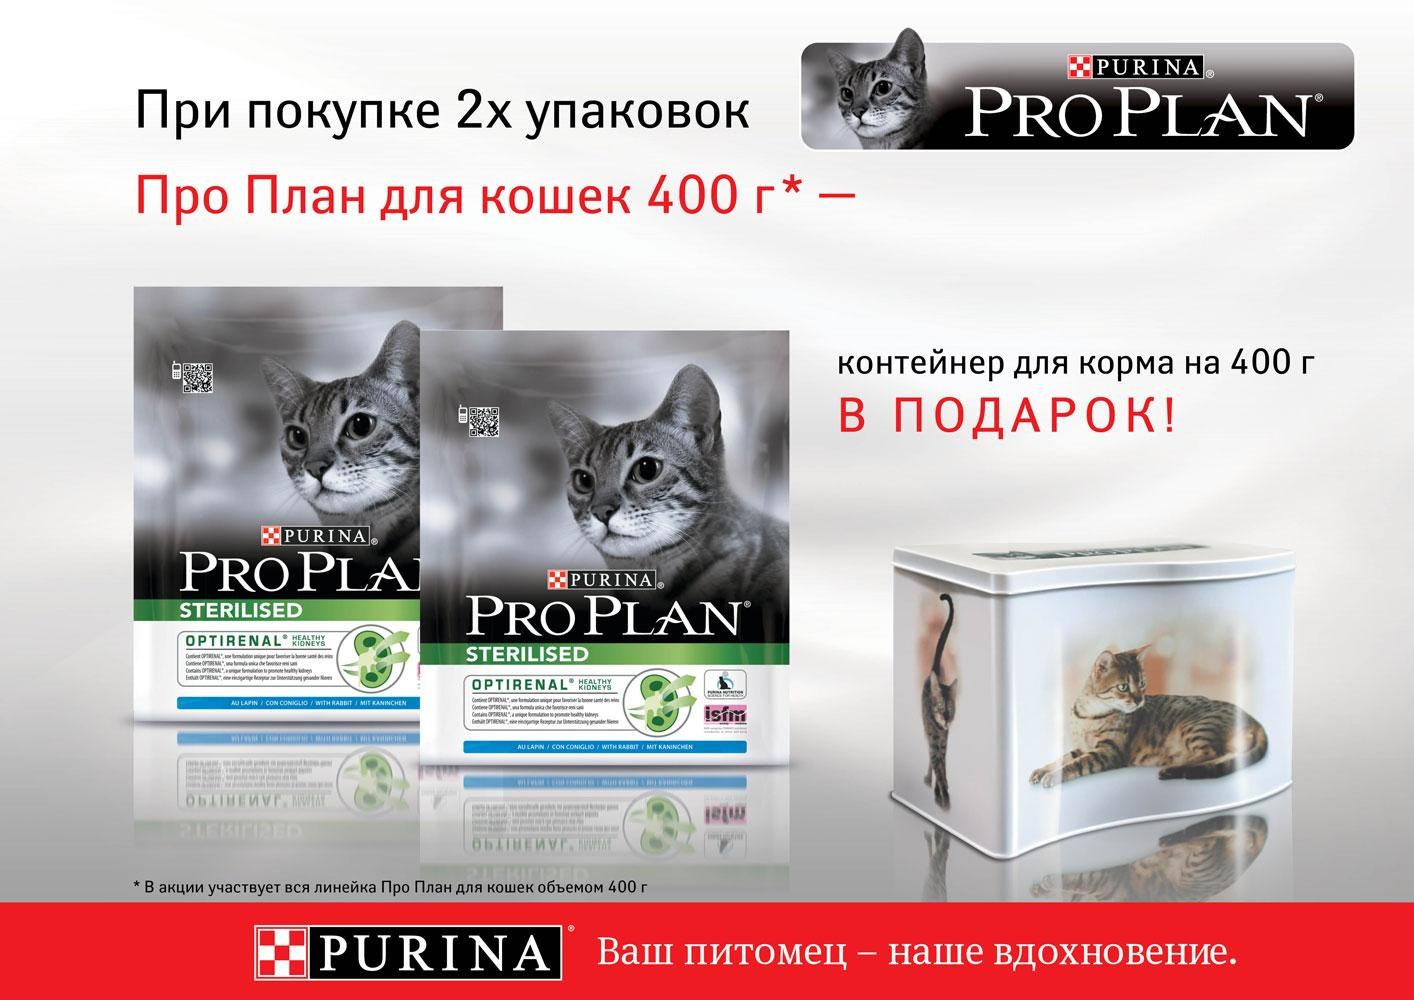 Pro plan elements для кошек. Purina Pro Plan корм Purina Pro Plan. Корма для кошек Пурина Проплан. Purina Pro Plan баннер. Пурина про план для кошек.